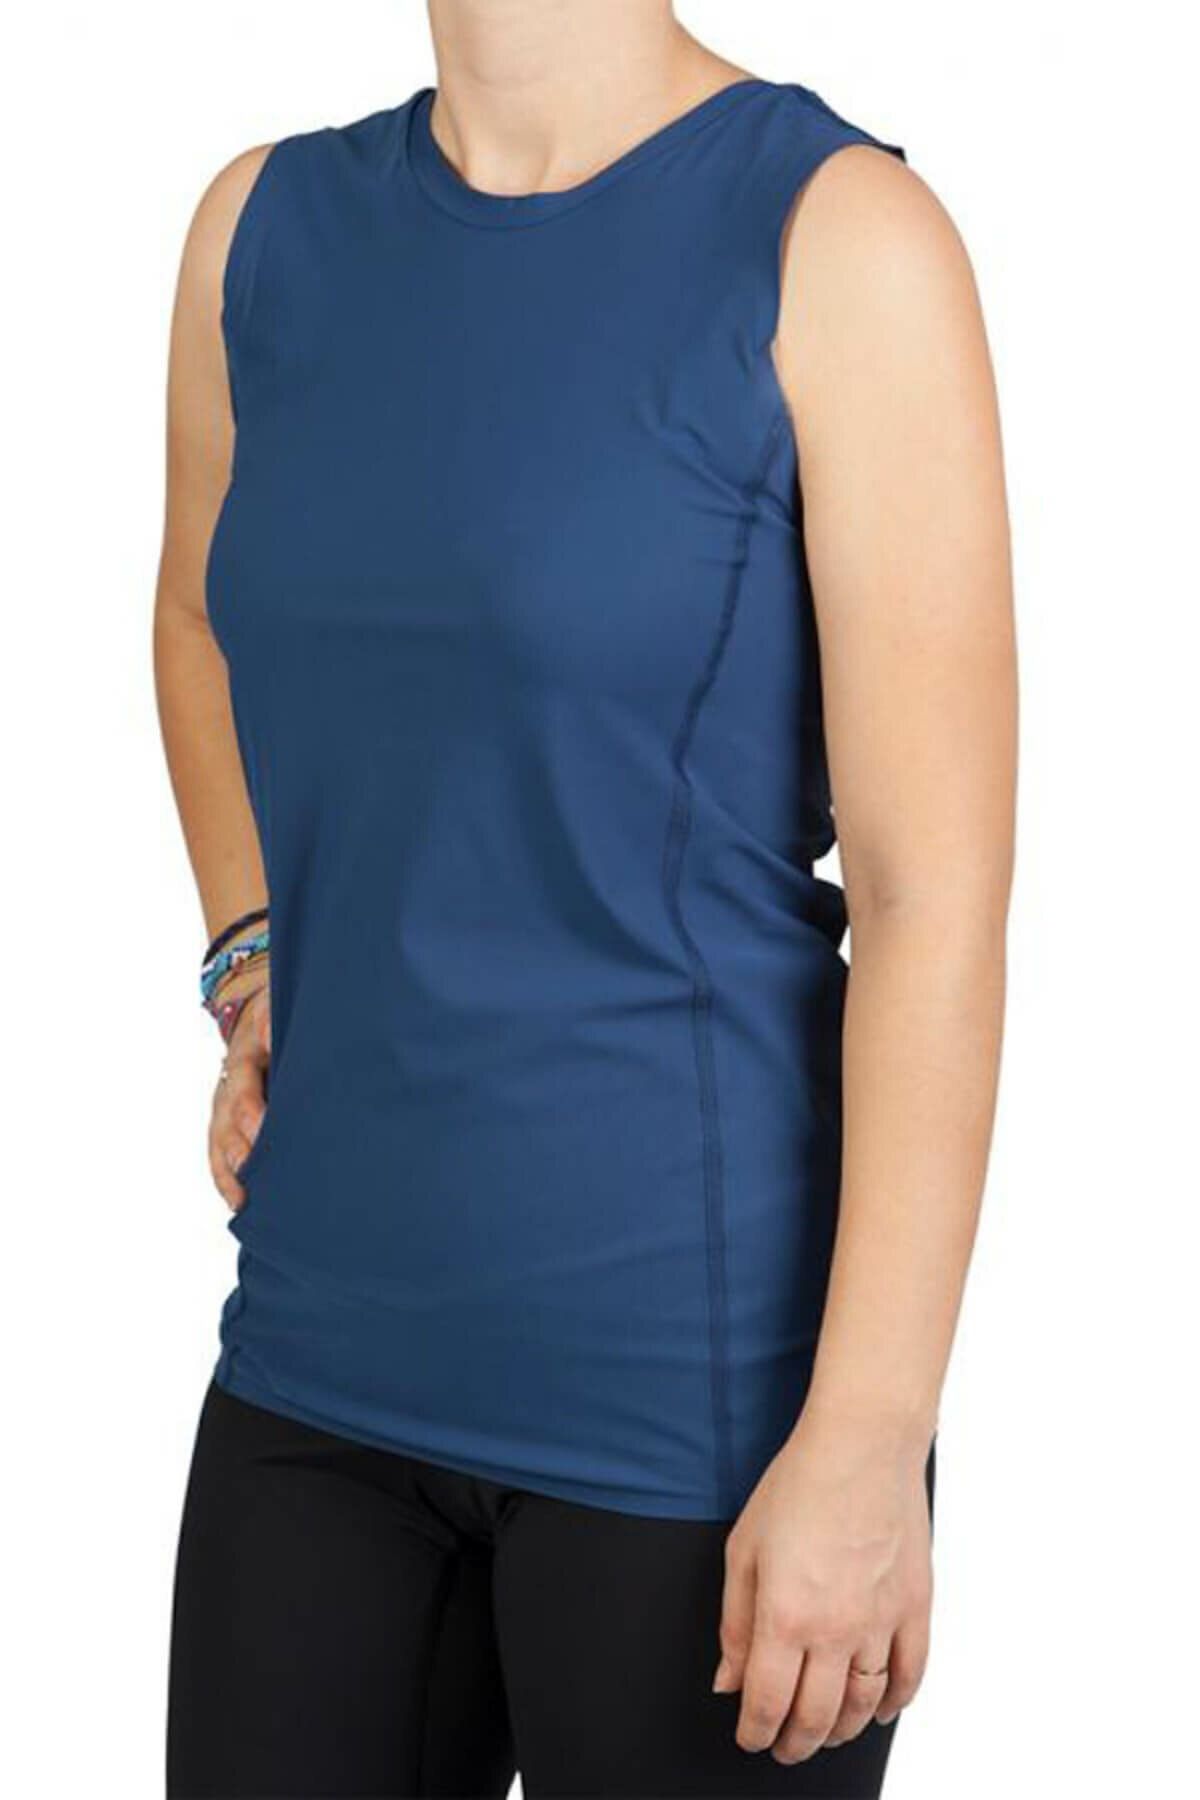 Exuma Kadın Lacivert T-shirt - 182200